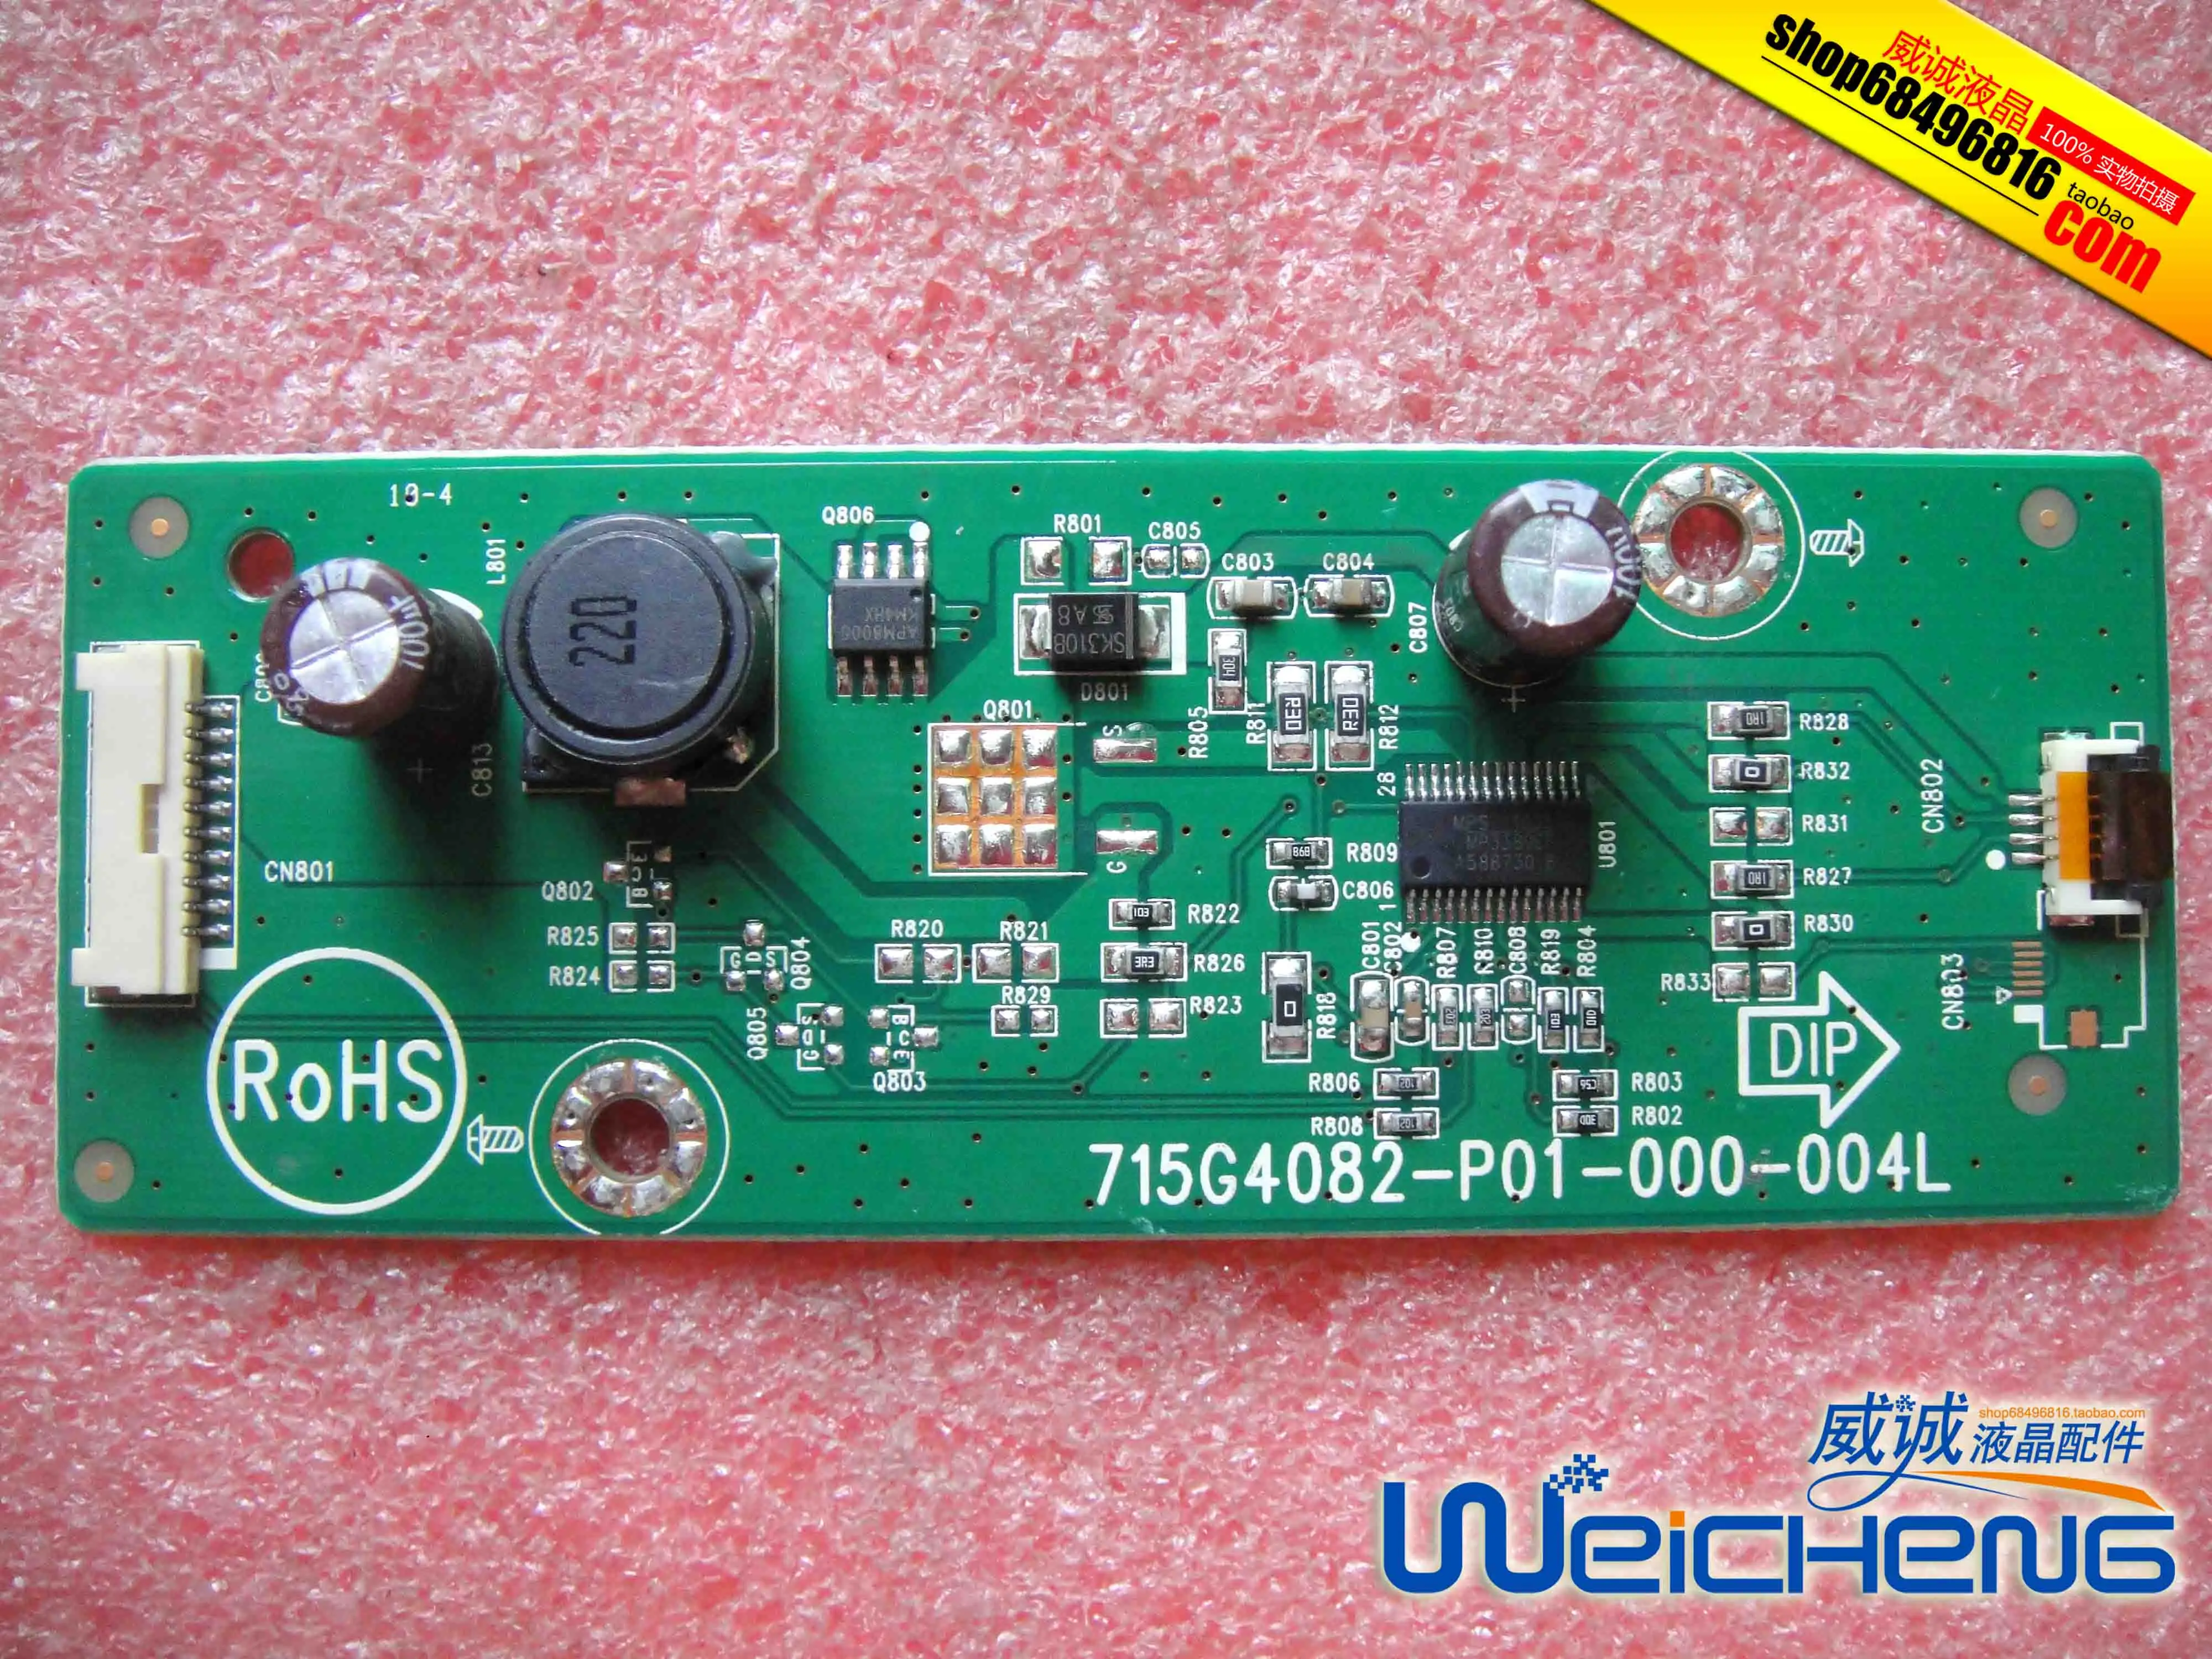 

e2036V TFT20W90PS1 high voltage board 715G4082-P01-000-004L LED interface 4P